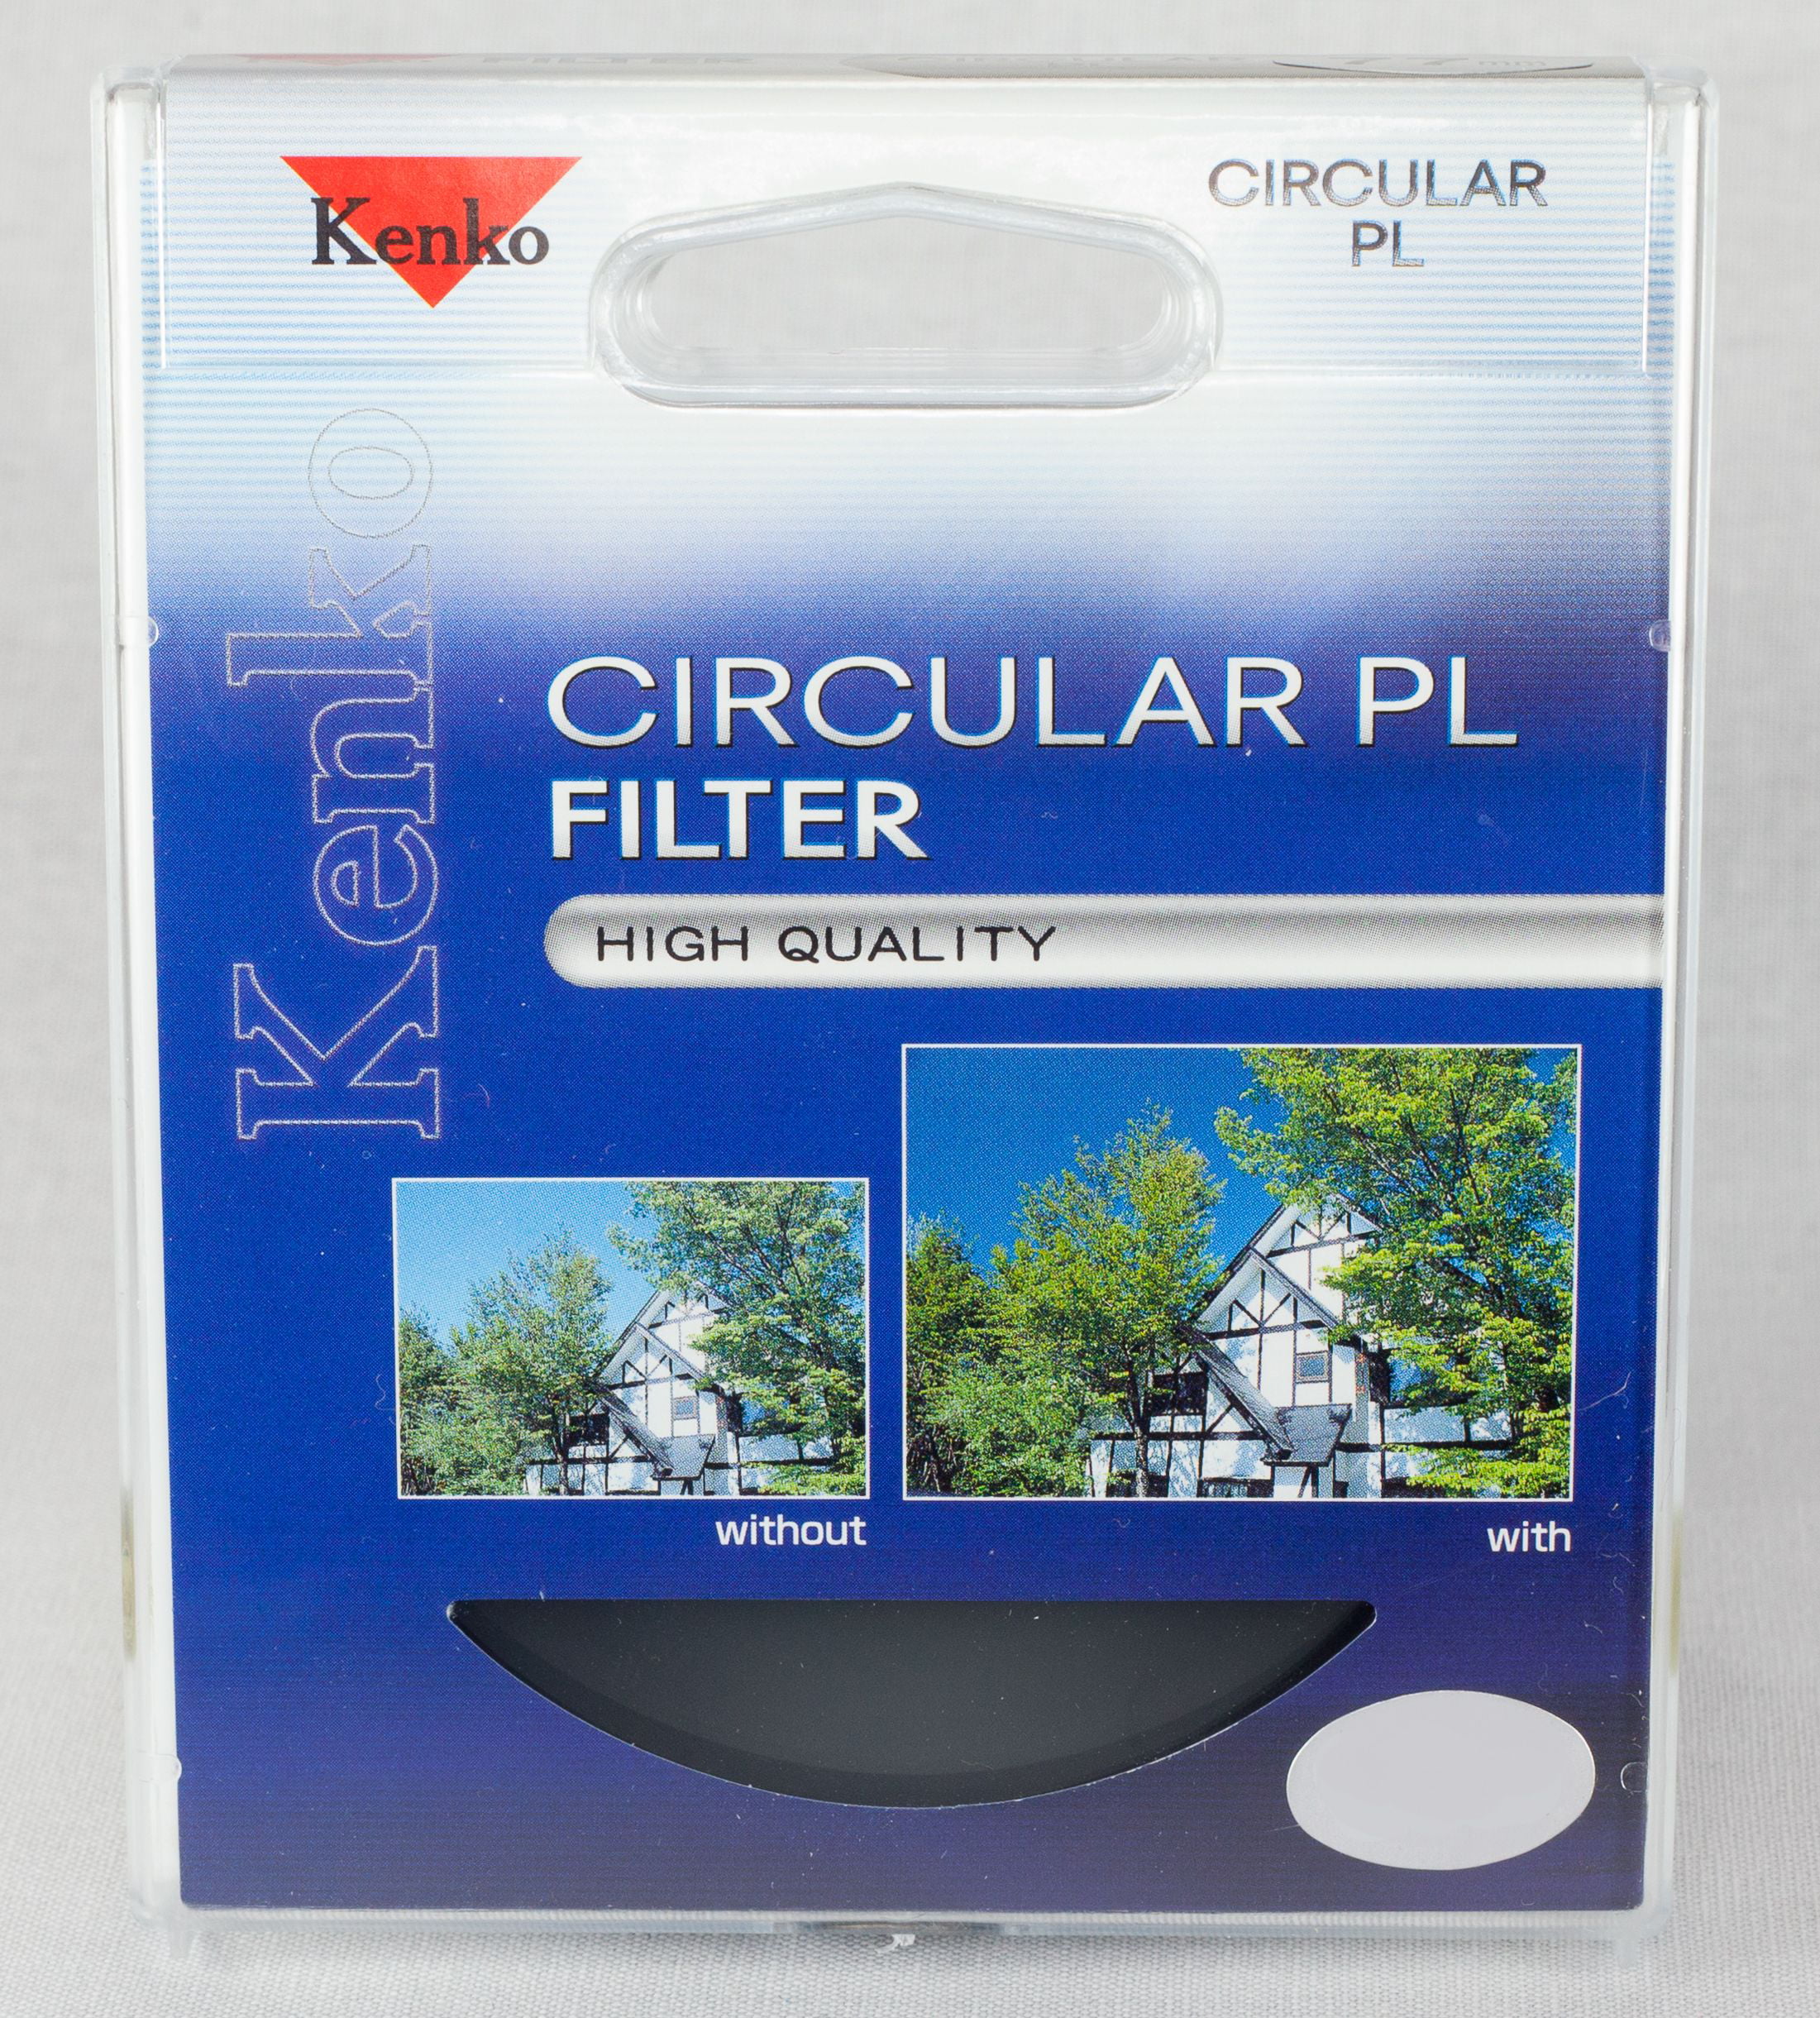 Kenko-Tokina 37mm Circular Polarizing Digital Camera Glass Filter Made In Japan 